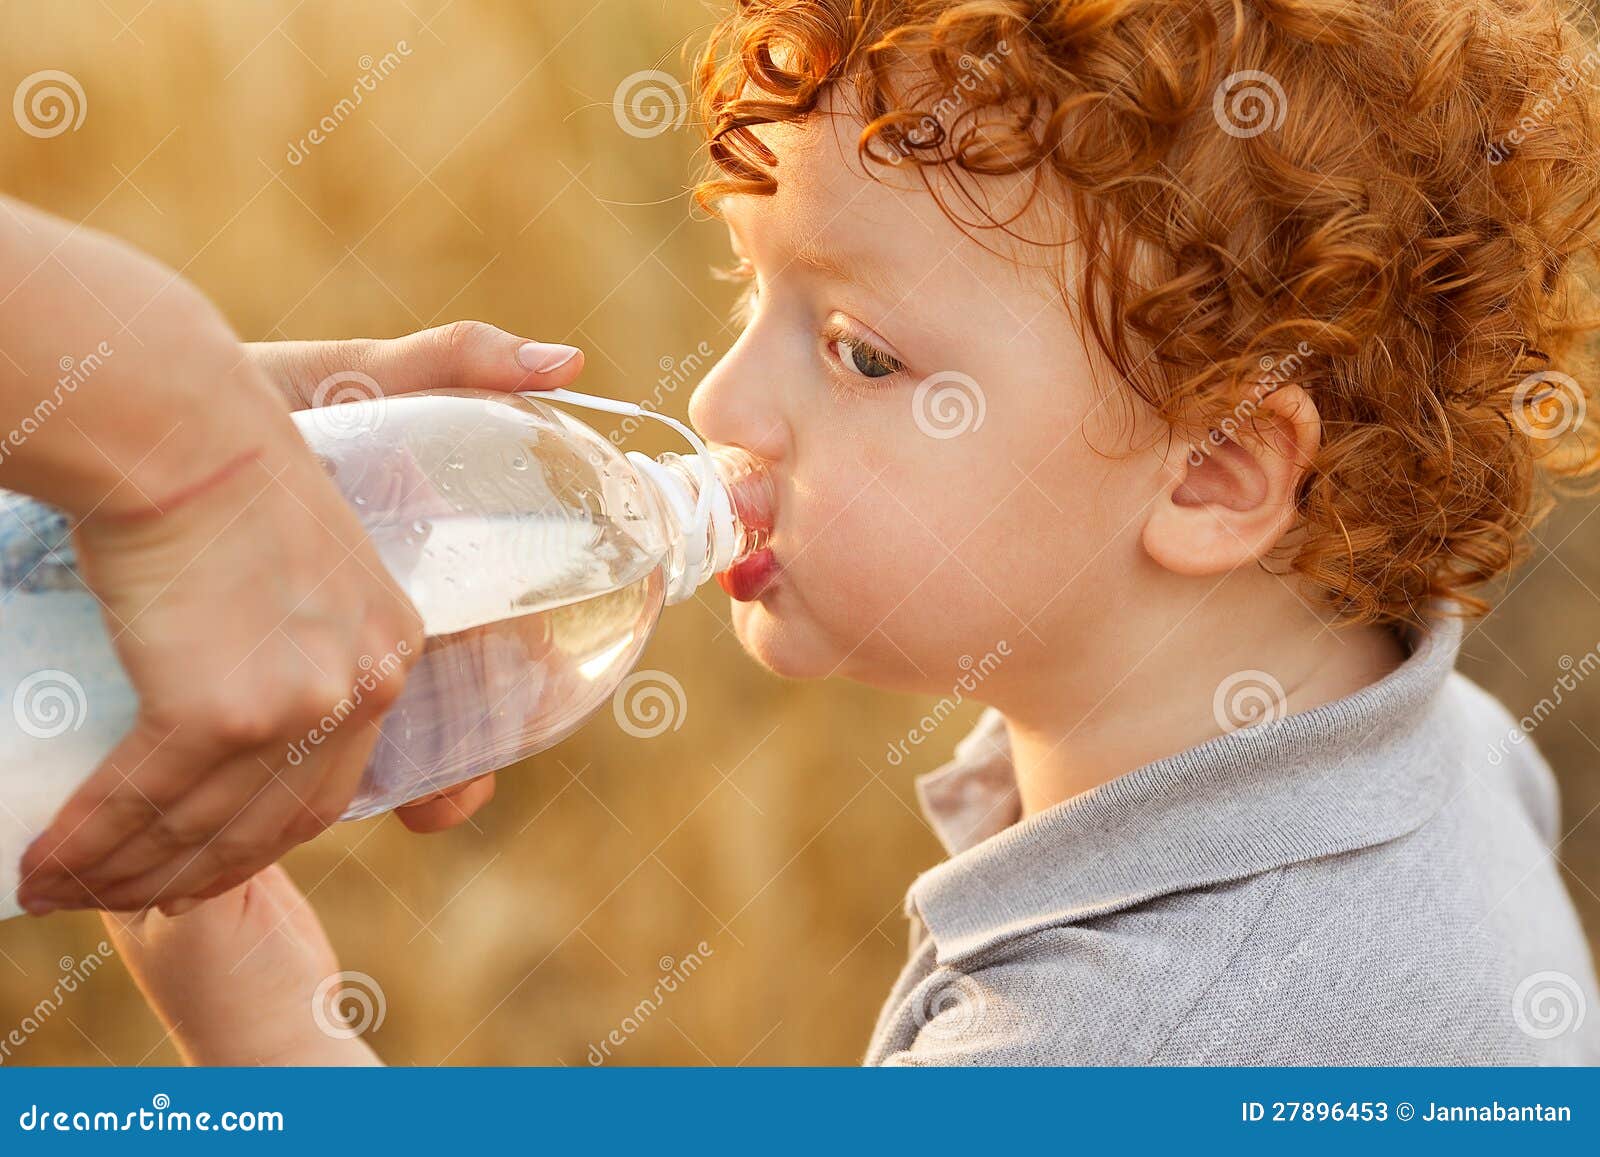 https://thumbs.dreamstime.com/z/baby-boy-drinking-water-27896453.jpg